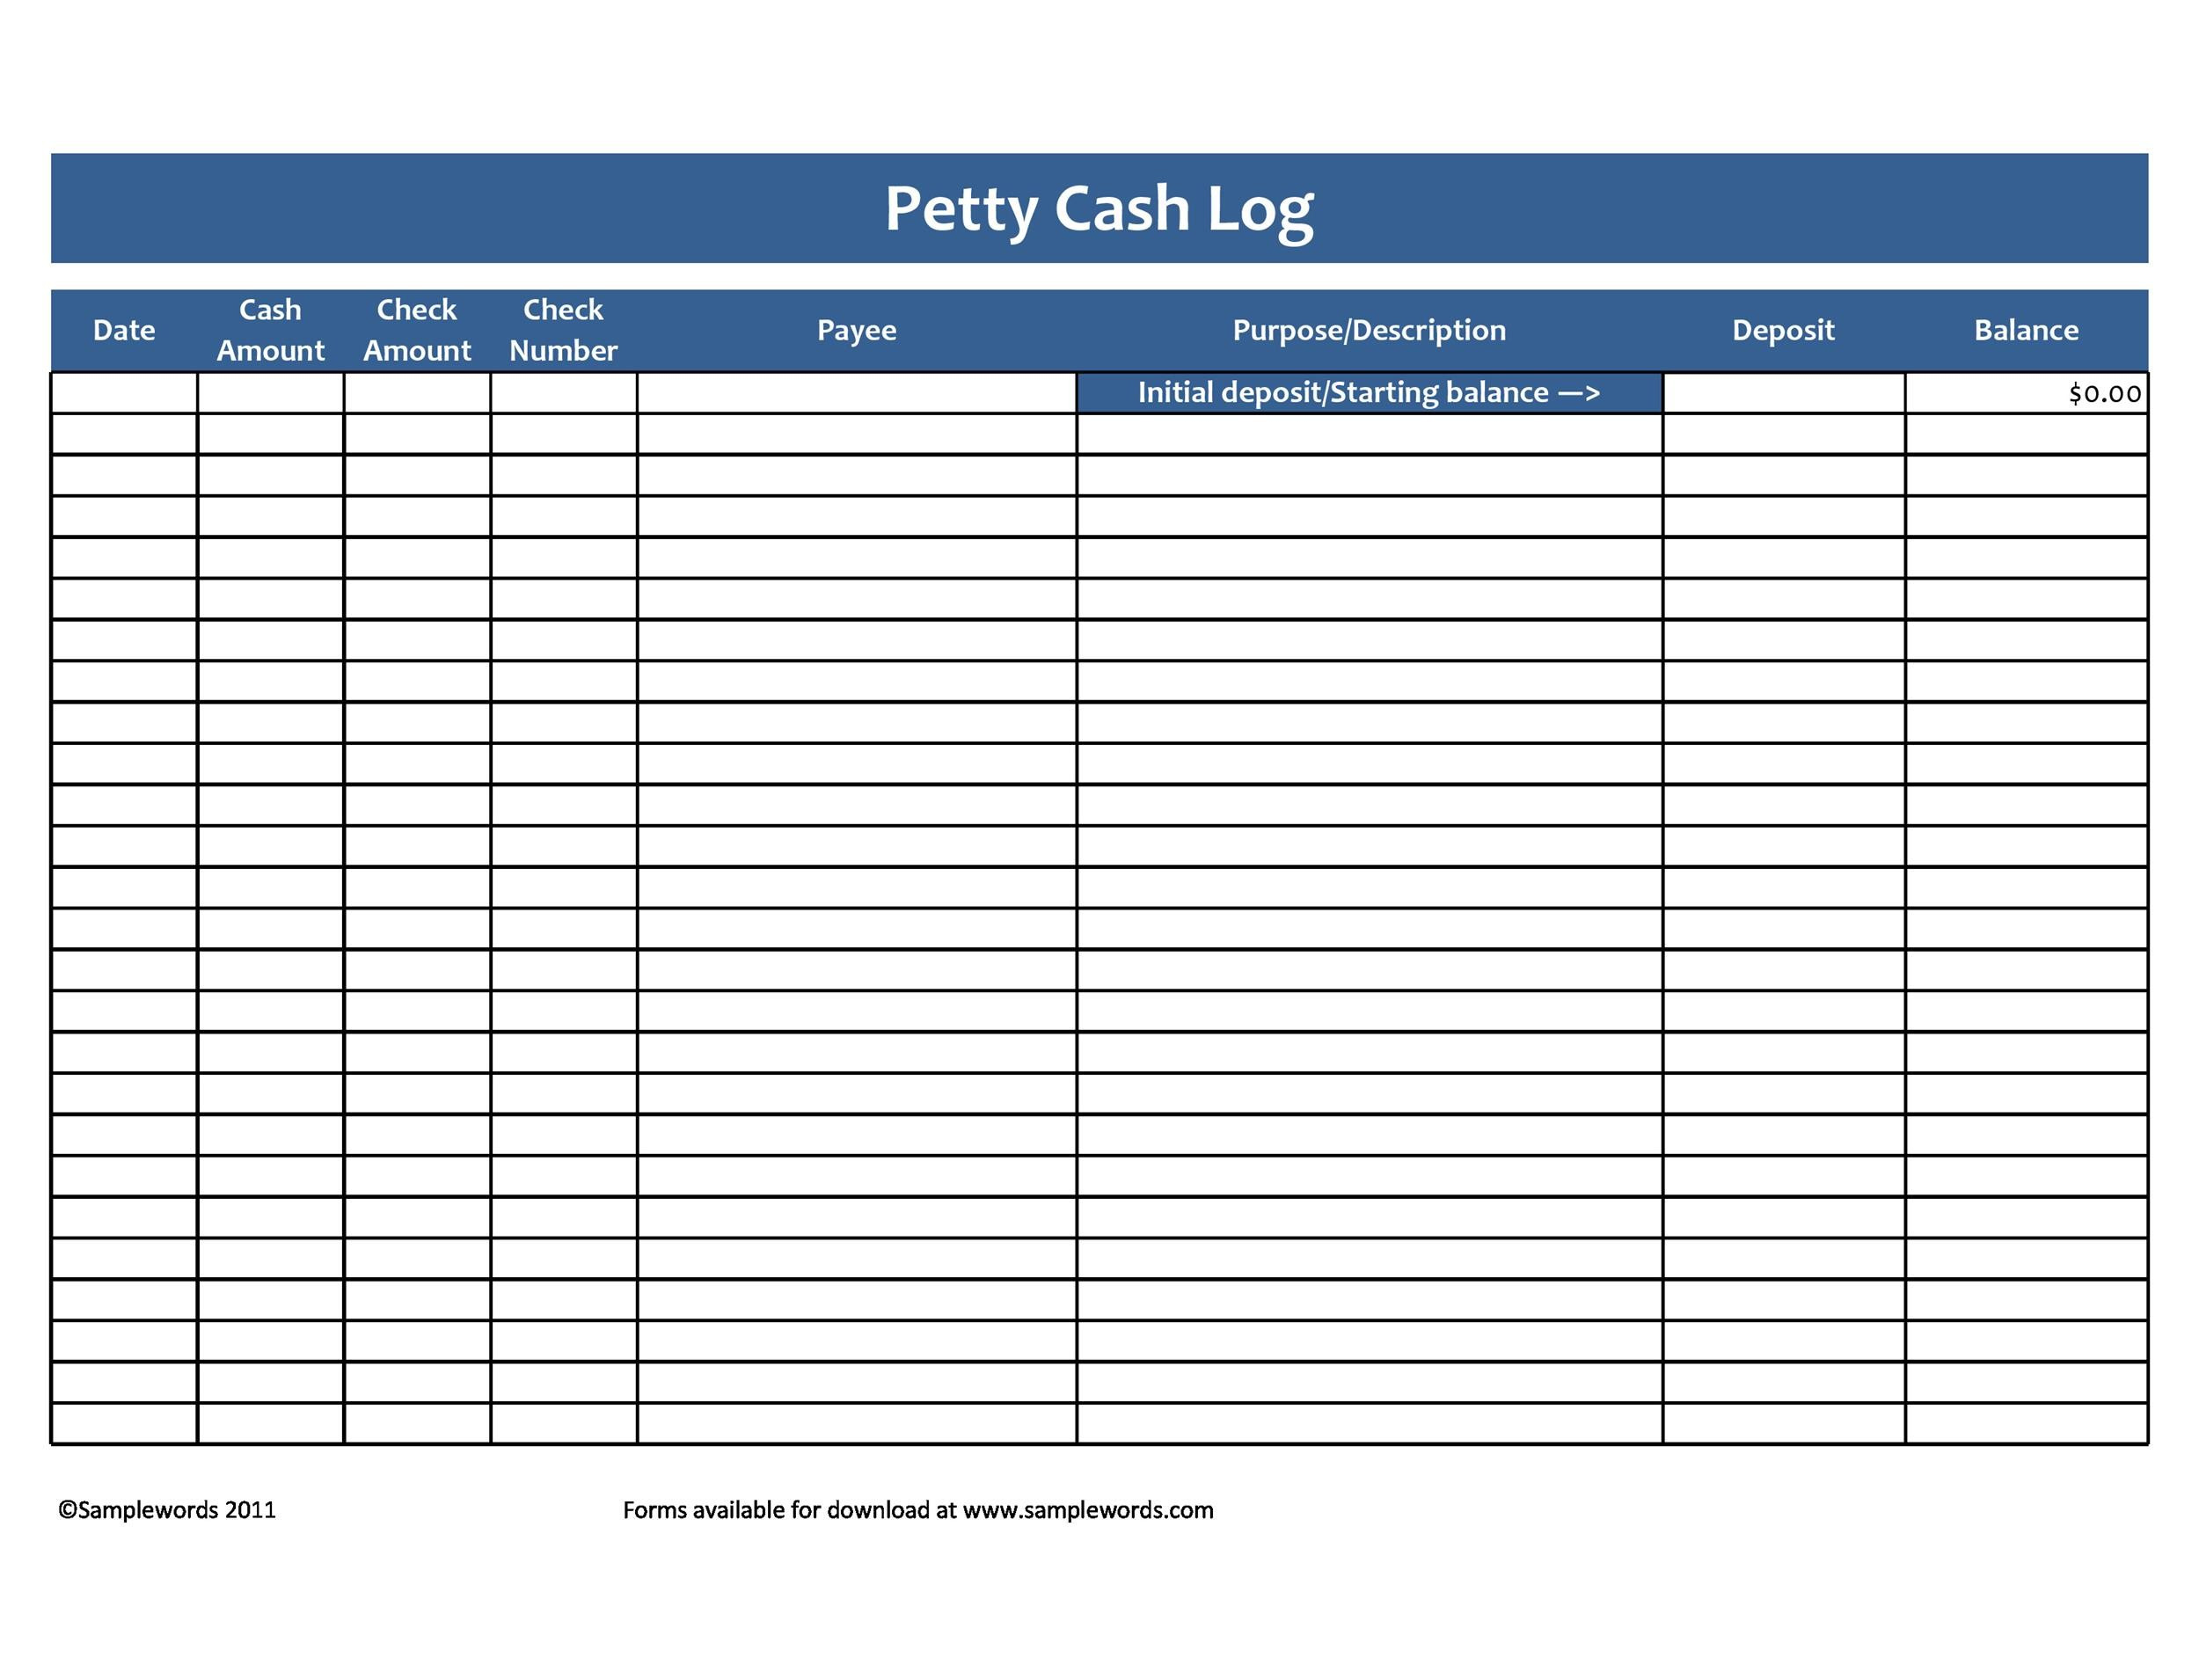 petty-cash-log-excel-templates